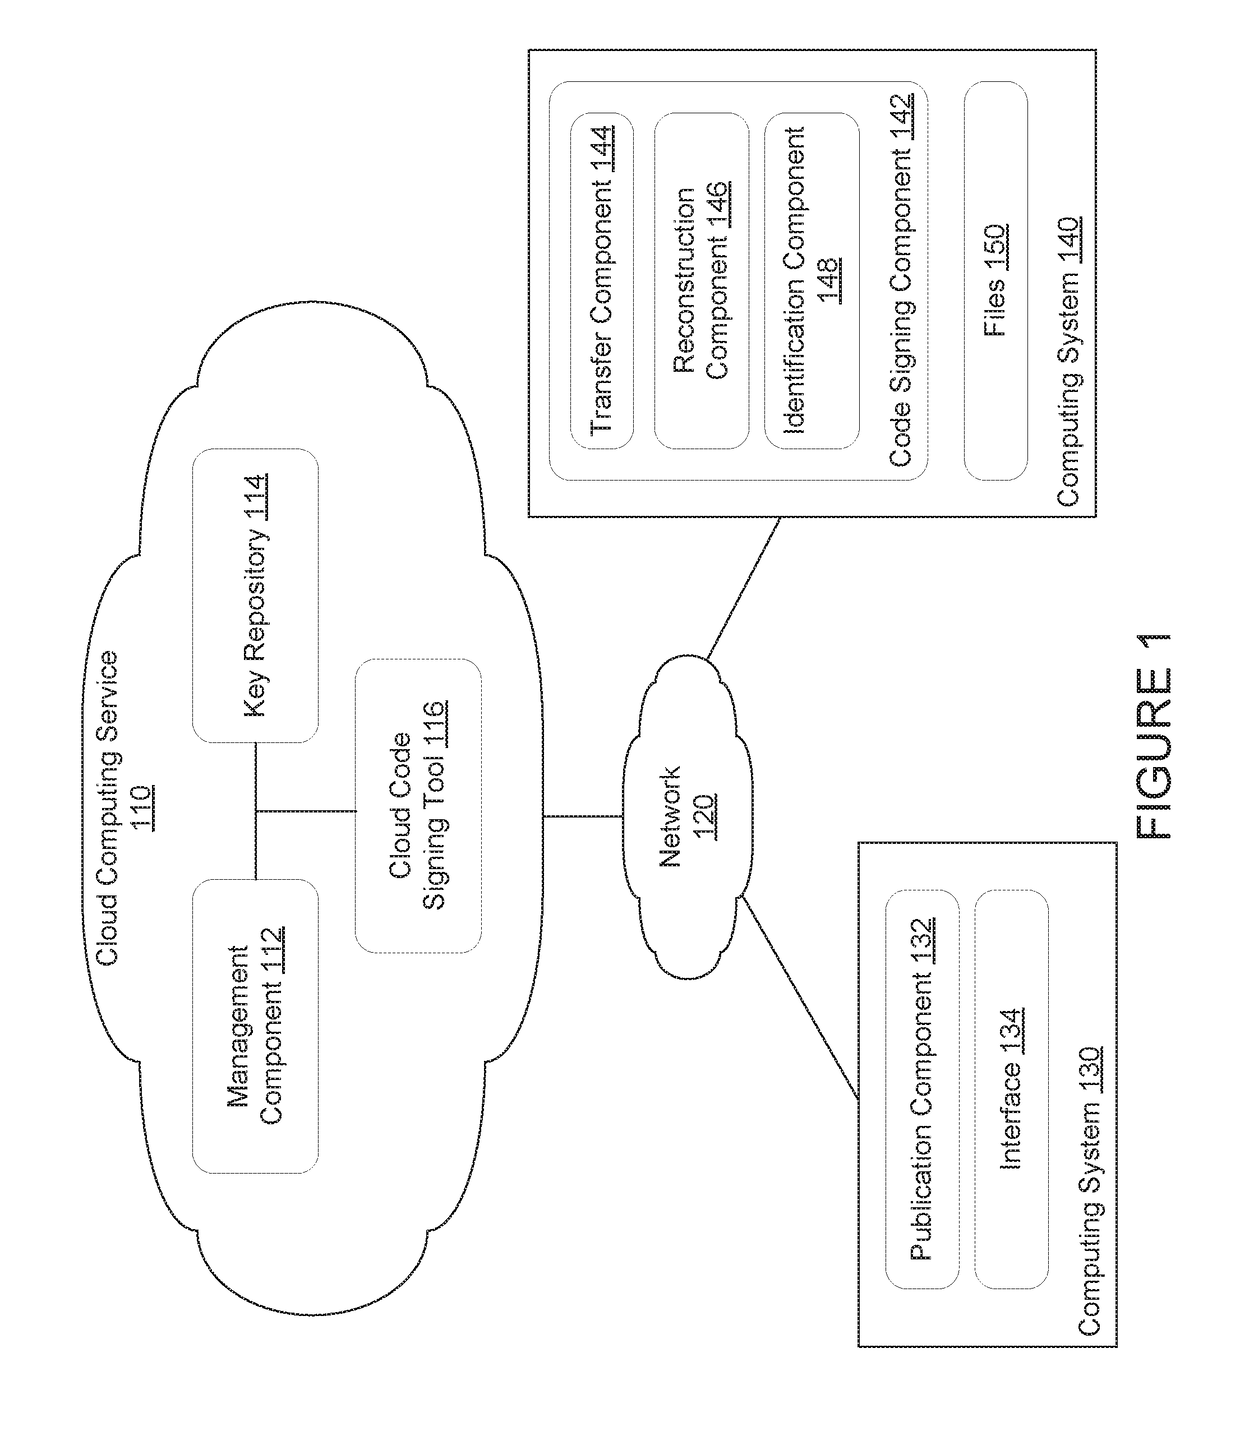 Cloud-based code signing service - hybrid model to avoid large file uploads